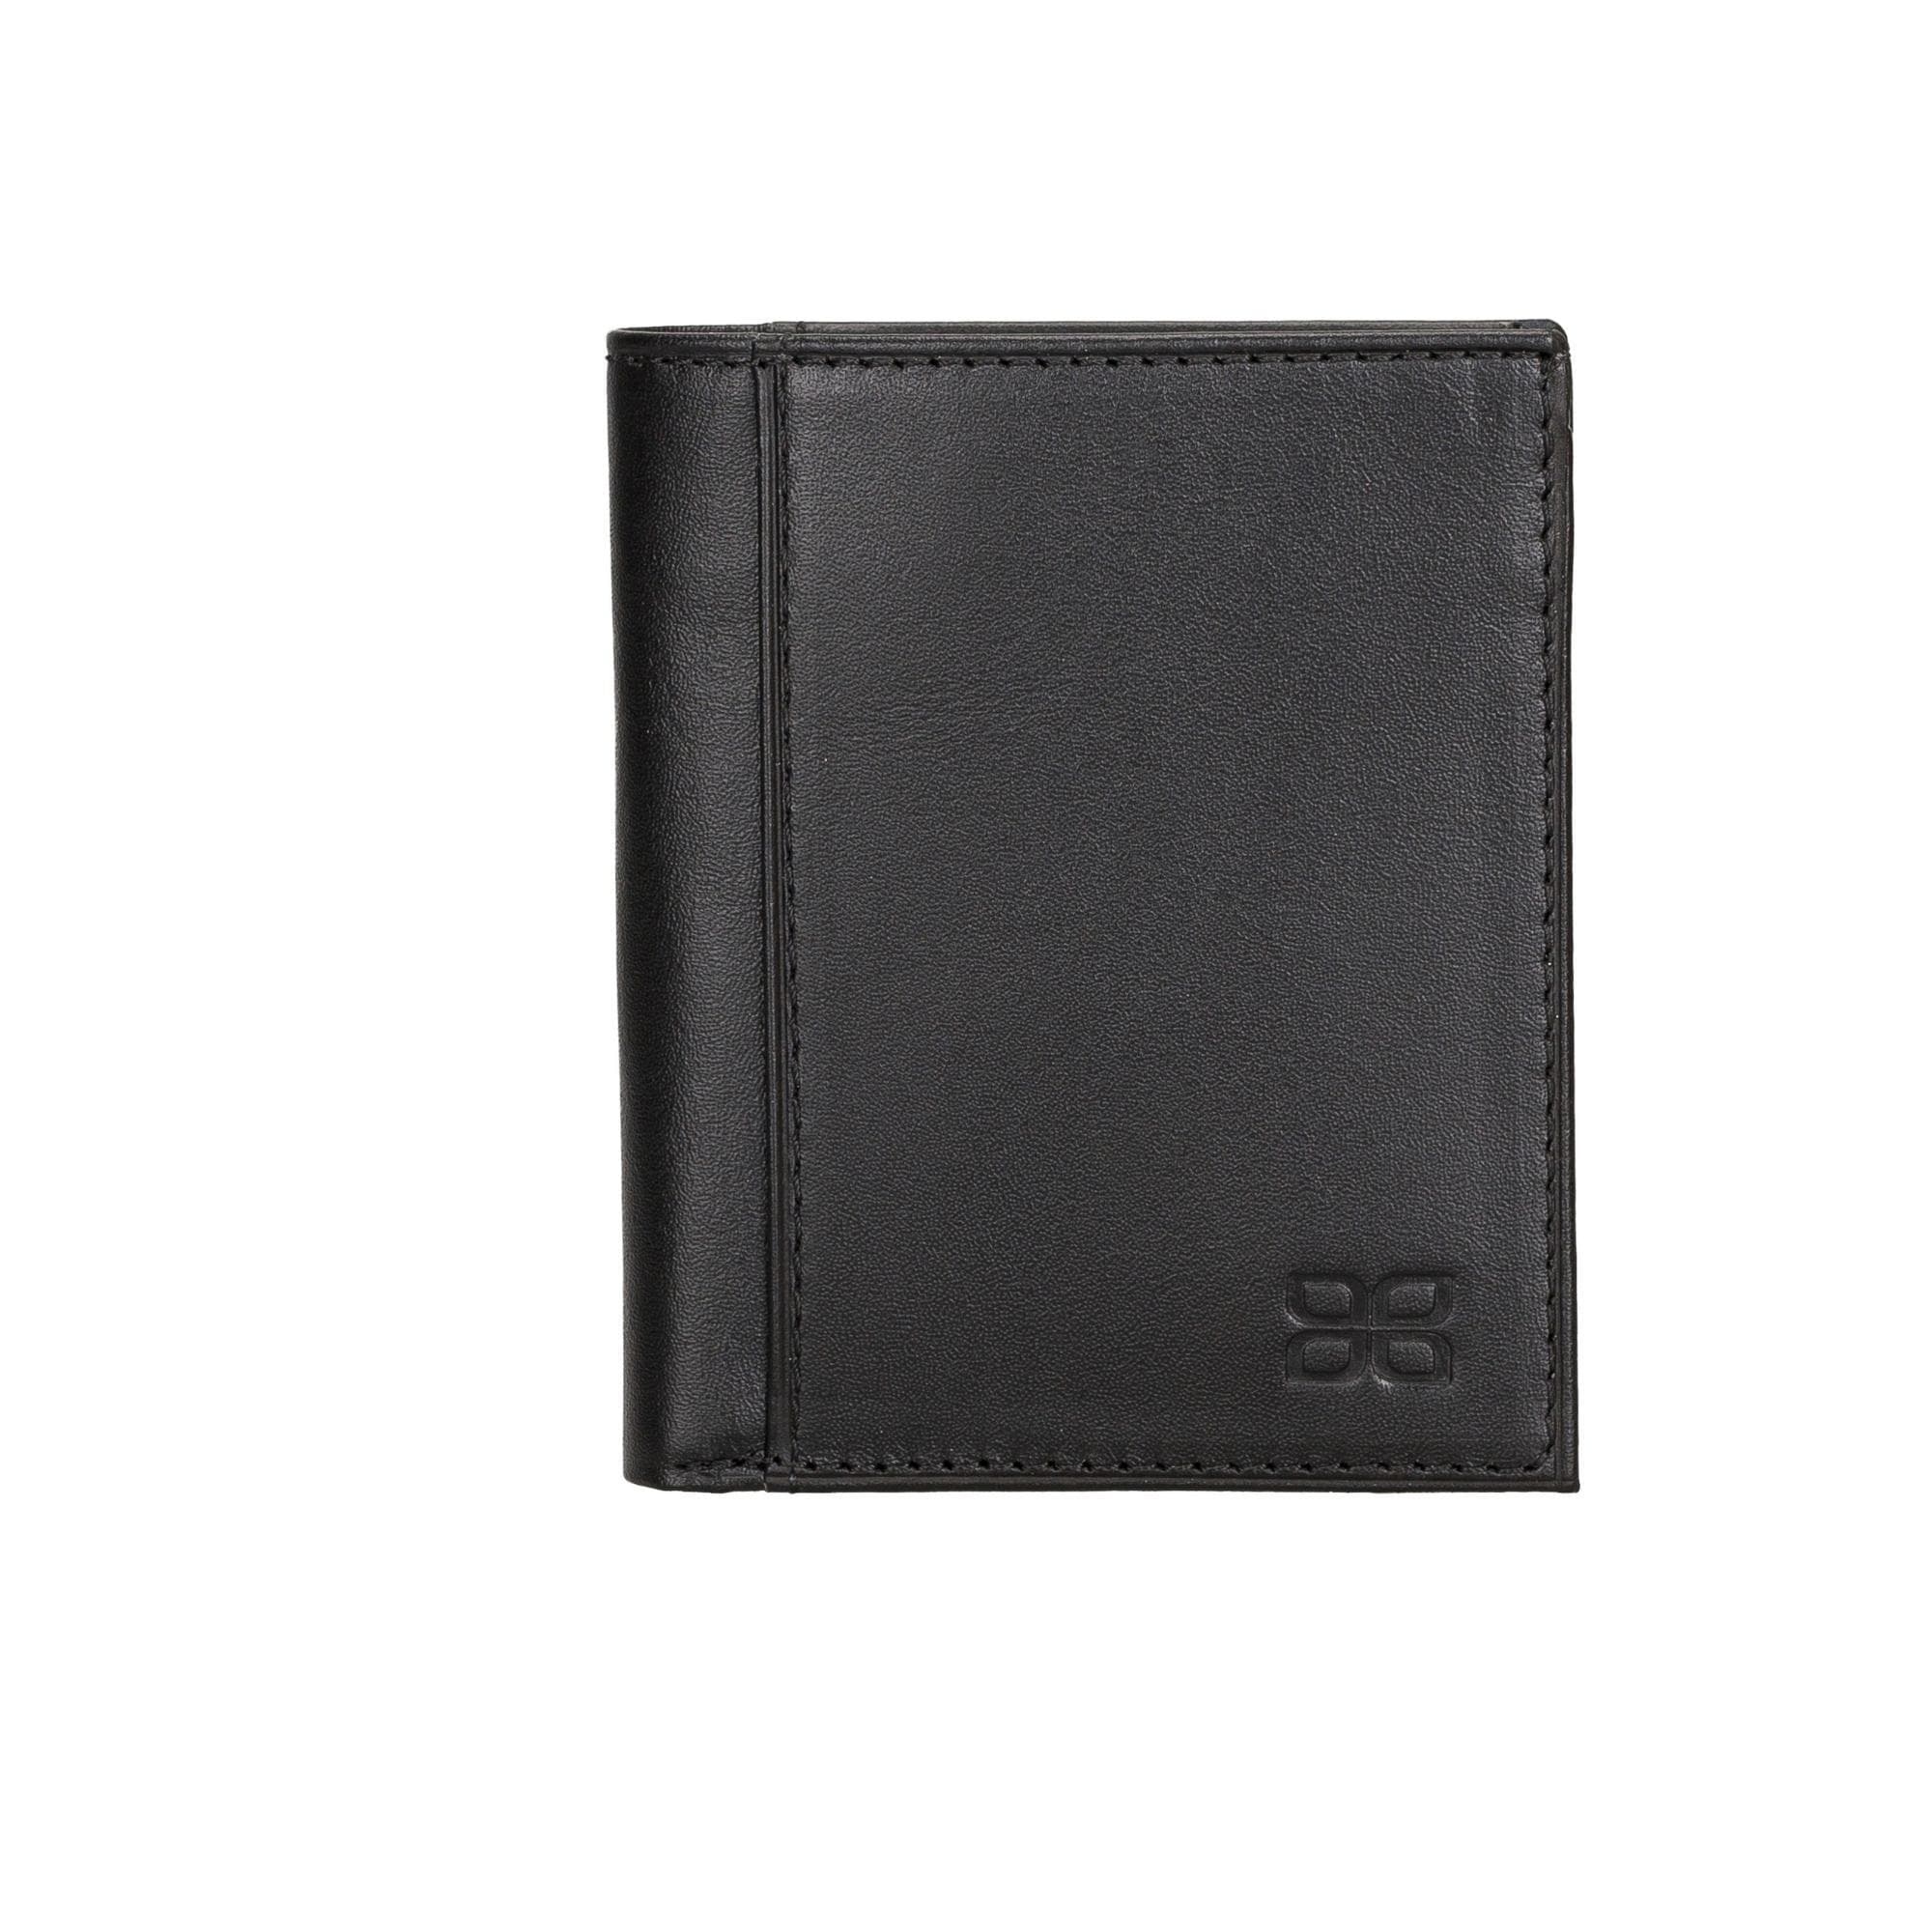 Yetta Leather Card Holder Bouletta LTD